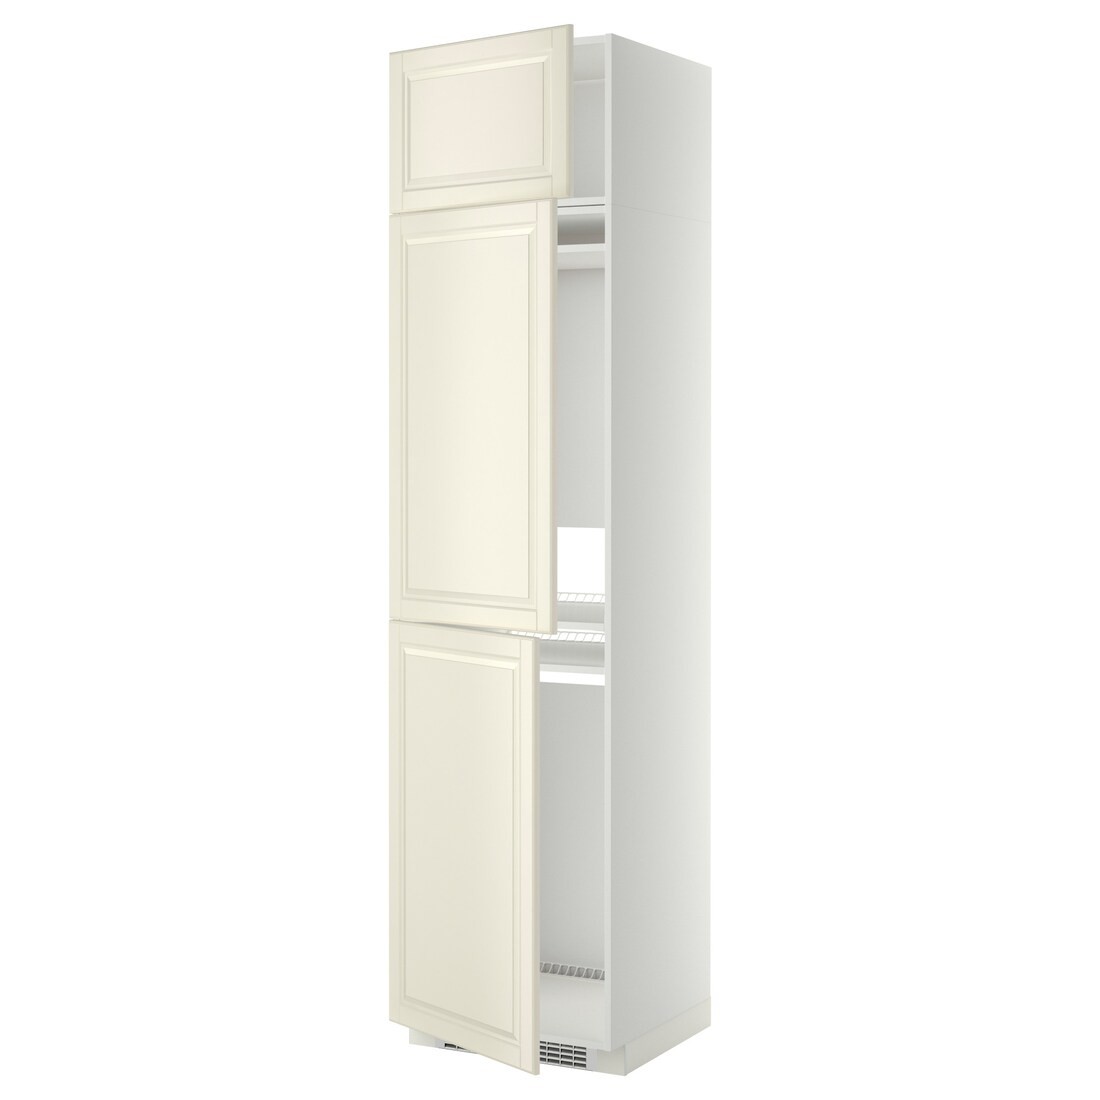 METOD МЕТОД Высокий шкаф для холодильника / морозильника / 3 дверцы, белый / Bodbyn кремовый, 60x60x240 см